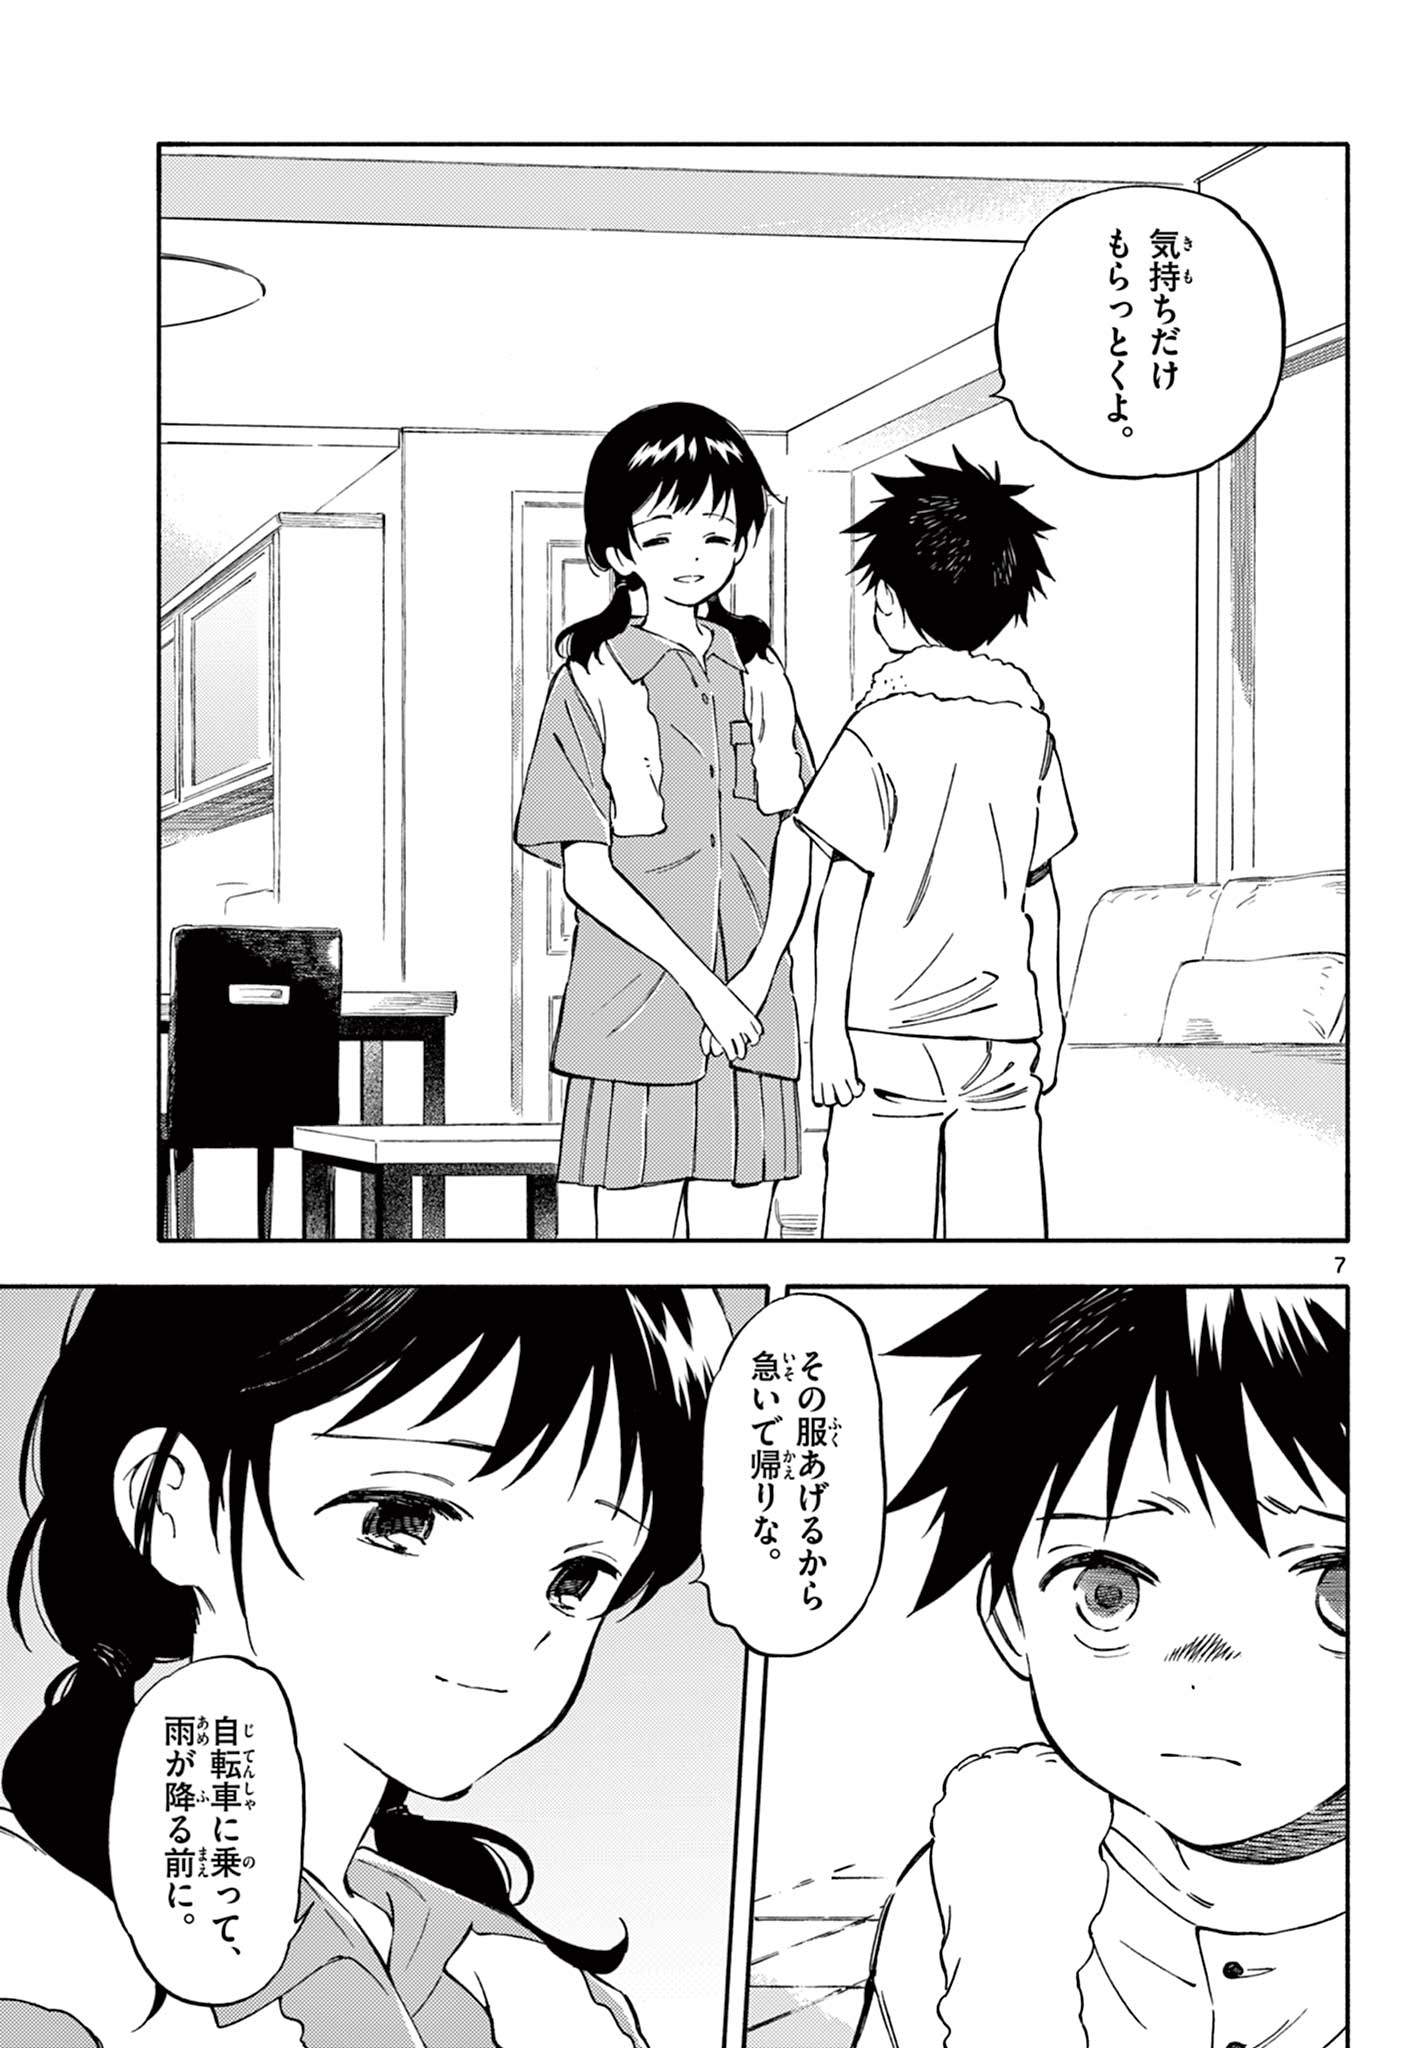 Nami no Shijima no Horizont - Chapter 13.1 - Page 7